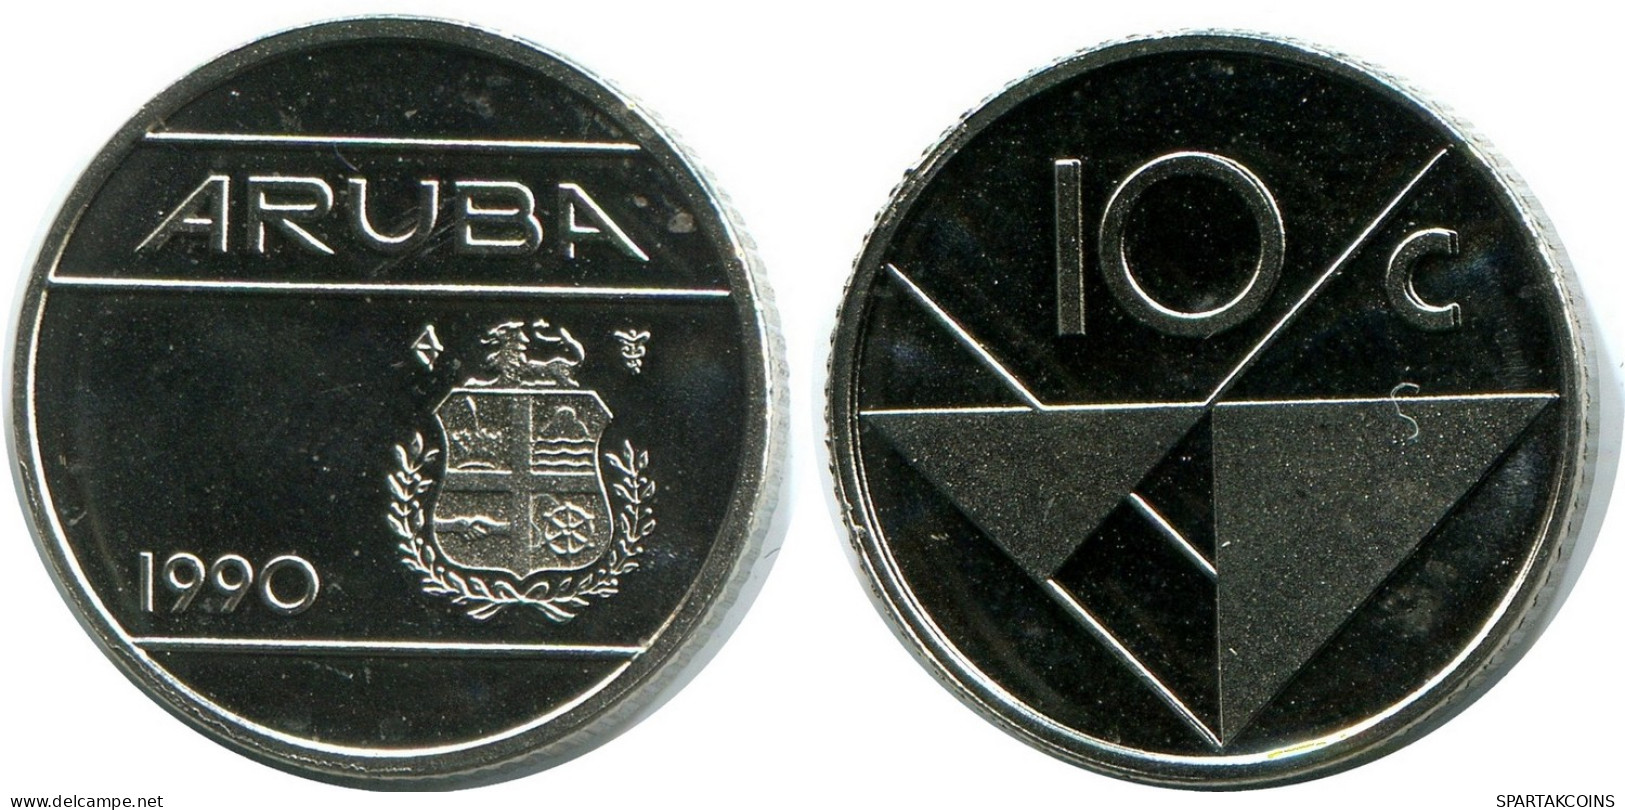 10 CENTS 1990 ARUBA Coin (From BU Mint Set) #AH072.U - Aruba